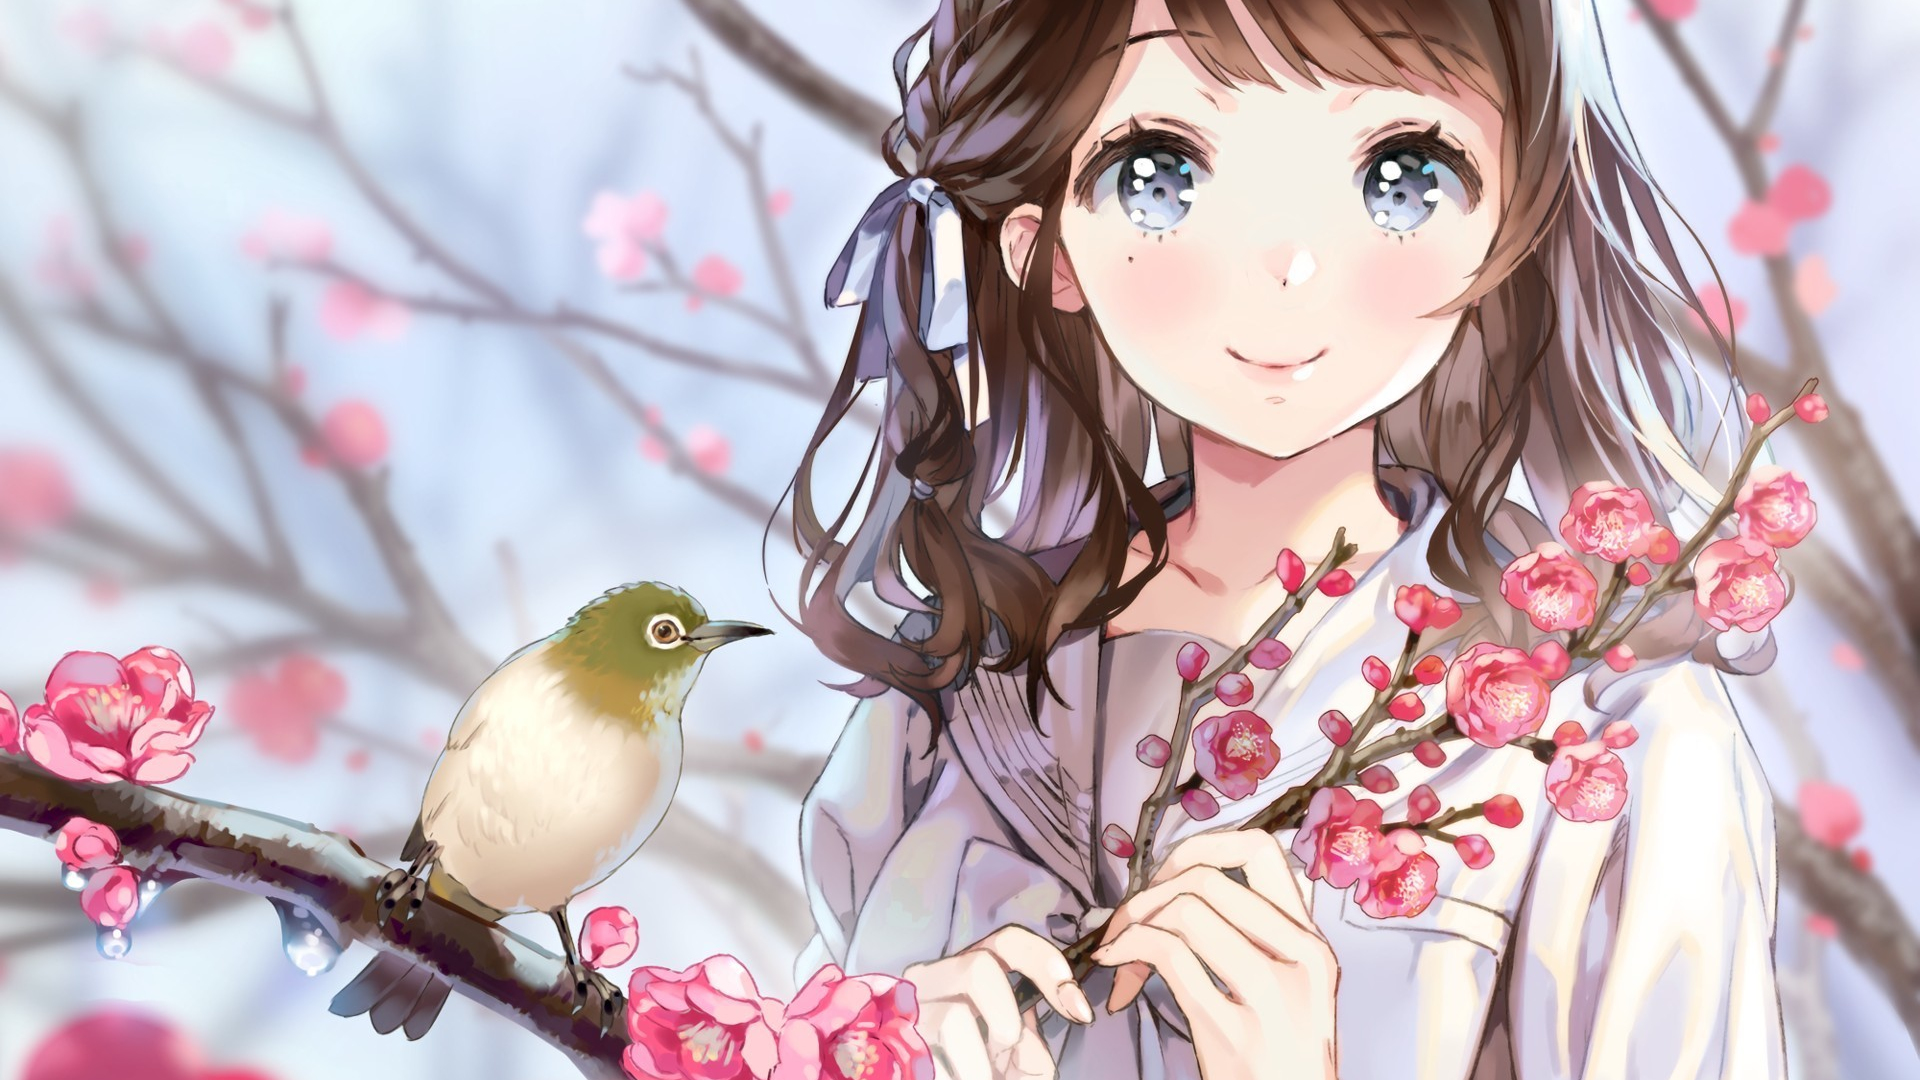 Download 1920x1080 Wallpaper Birds Cherry Blossom Anime Girl Cute Full Hd Hdtv Fhd 1080p